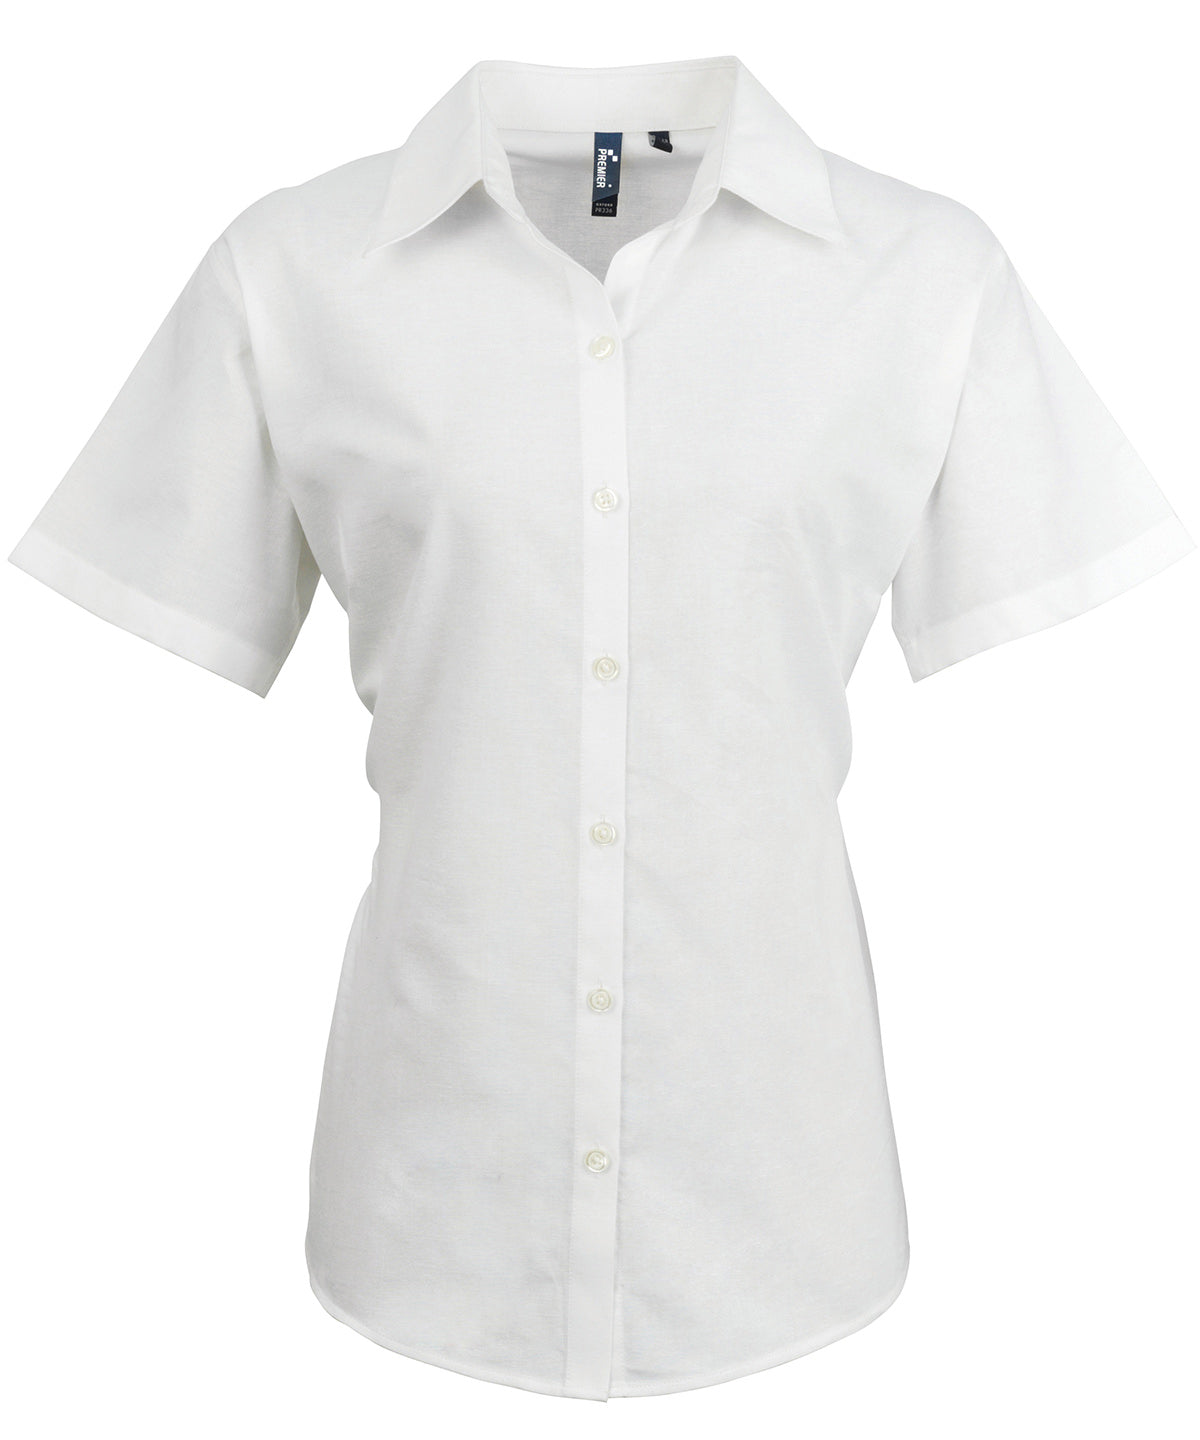 Bolir - Women's Signature Oxford Short Sleeve Shirt